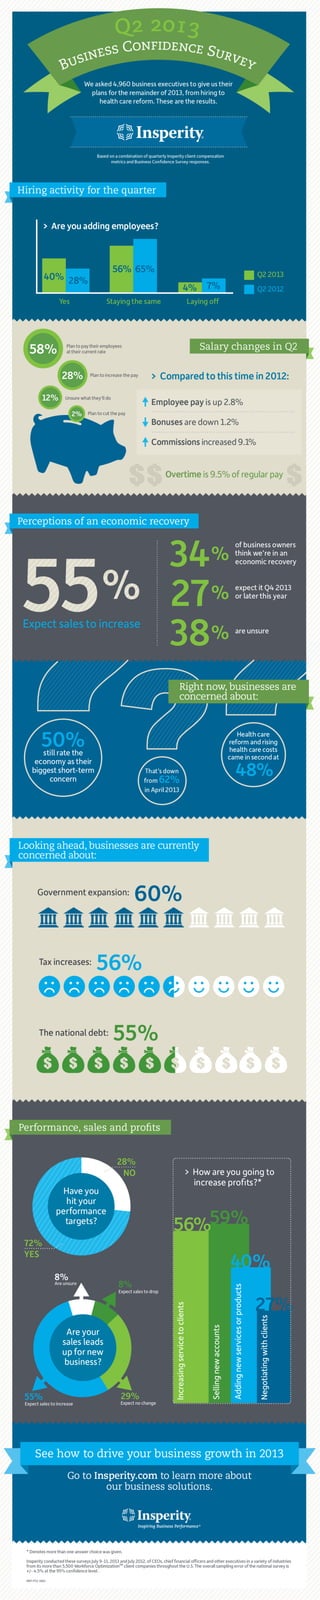 Insperity Business Confidence Survey: Q2 2013 [Infographic]